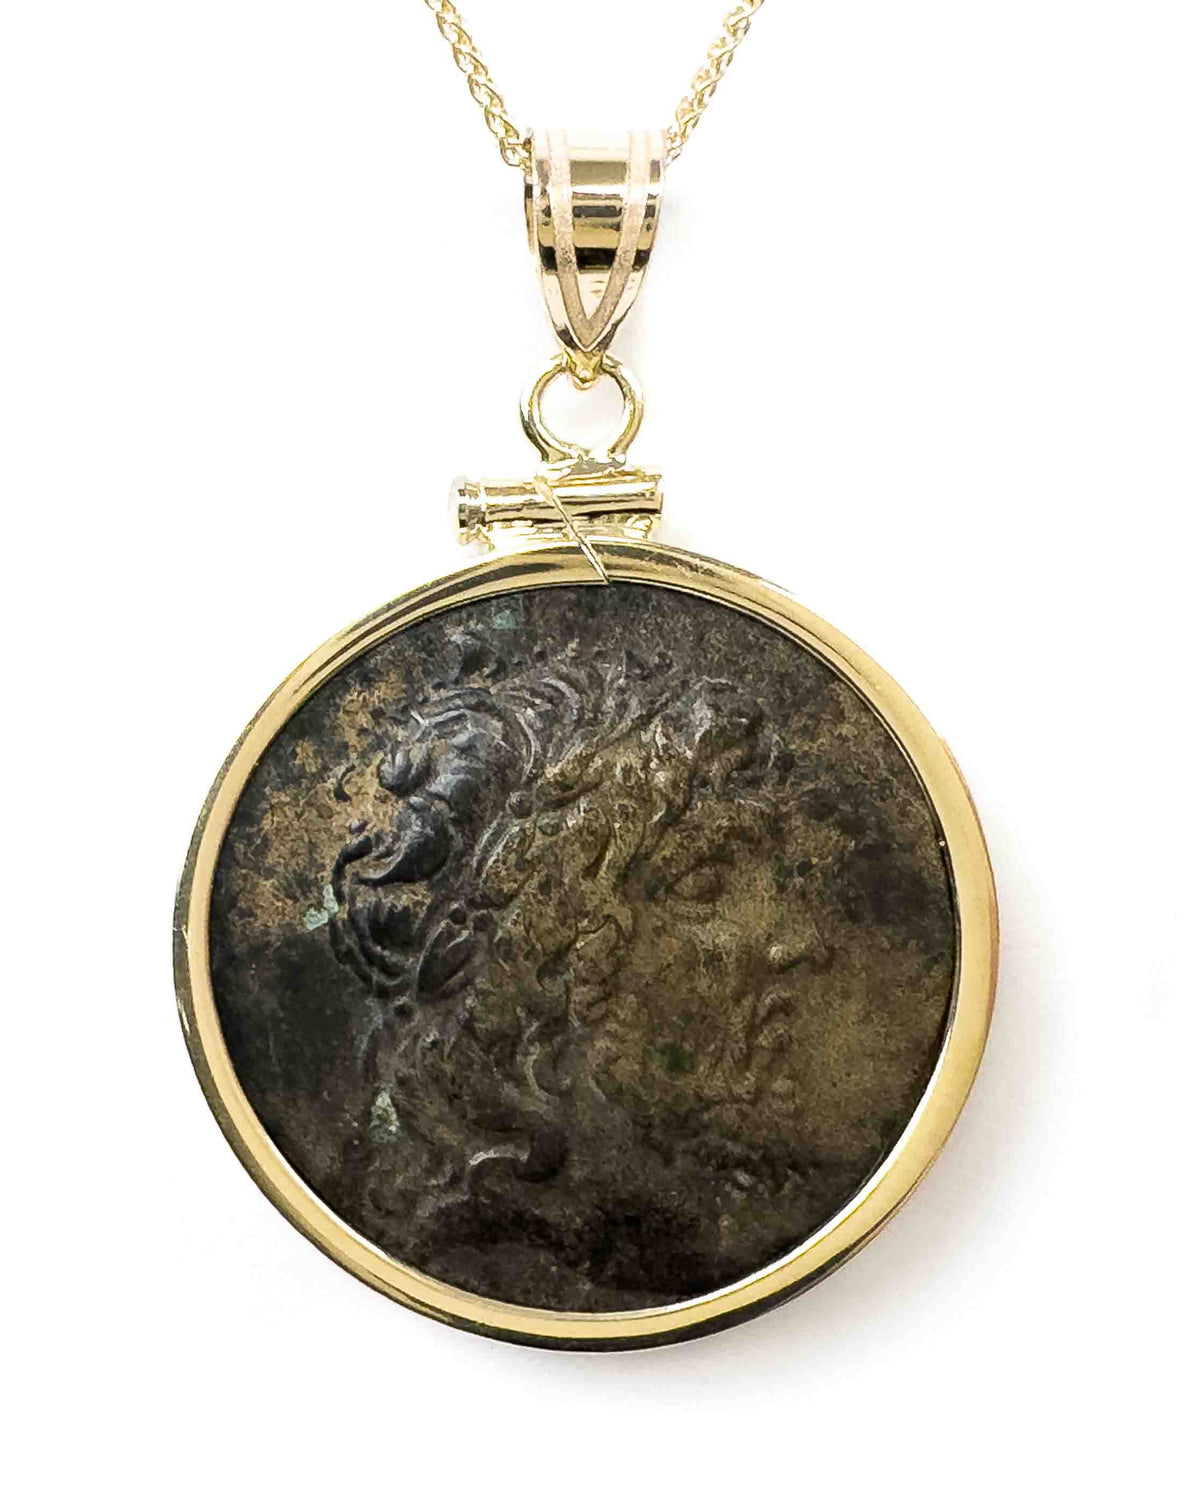 Close up photos of 14k Gold bezel-set pendant with real Ancient Greek bronze Zeus coin.